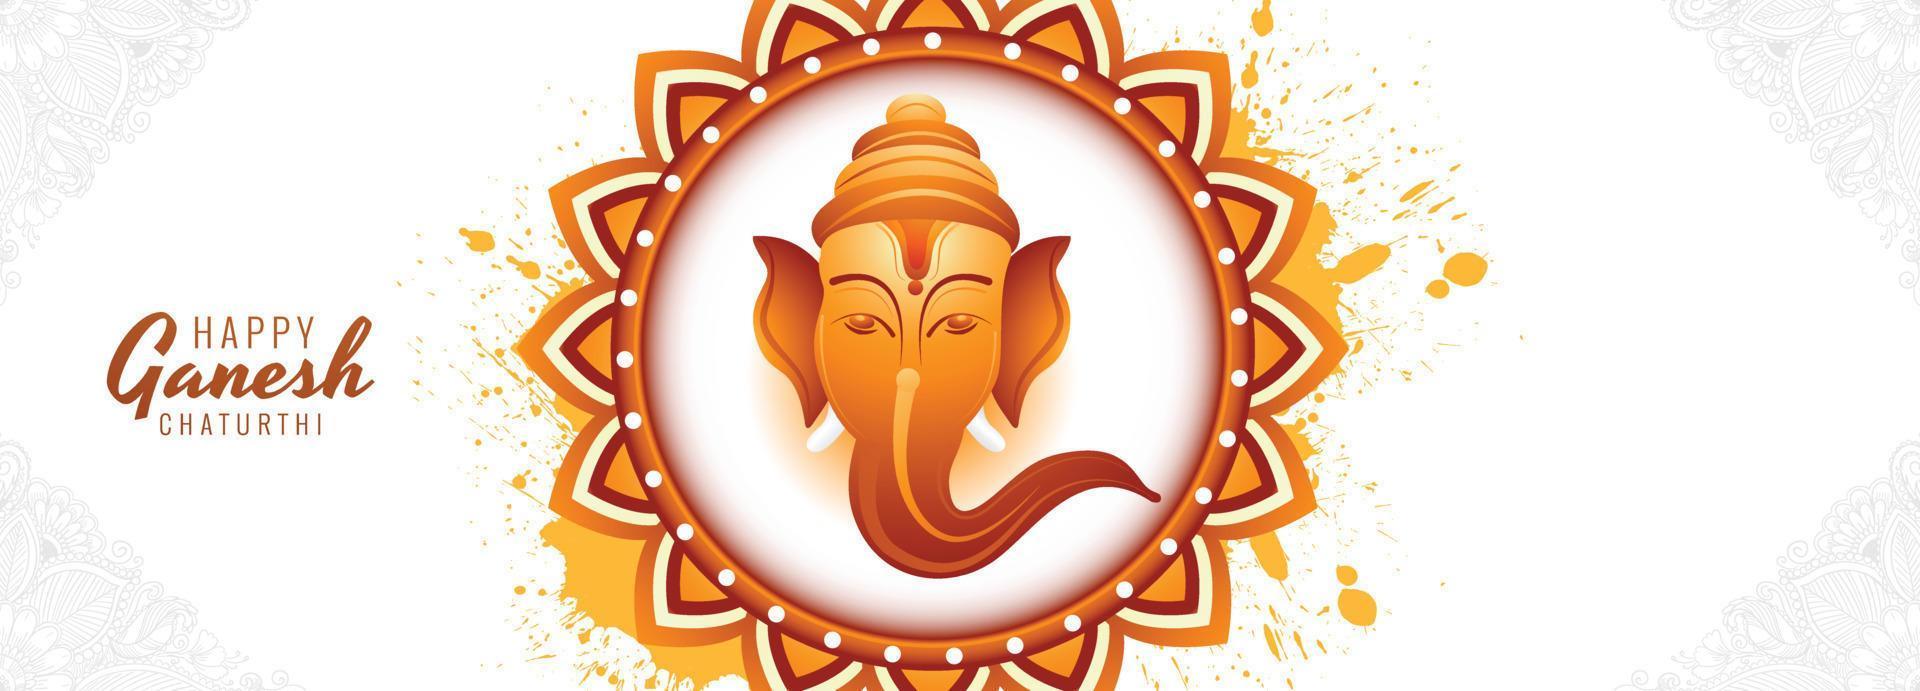 feliz ganesh chaturthi festival religioso indio diseño de tarjeta de banner vector